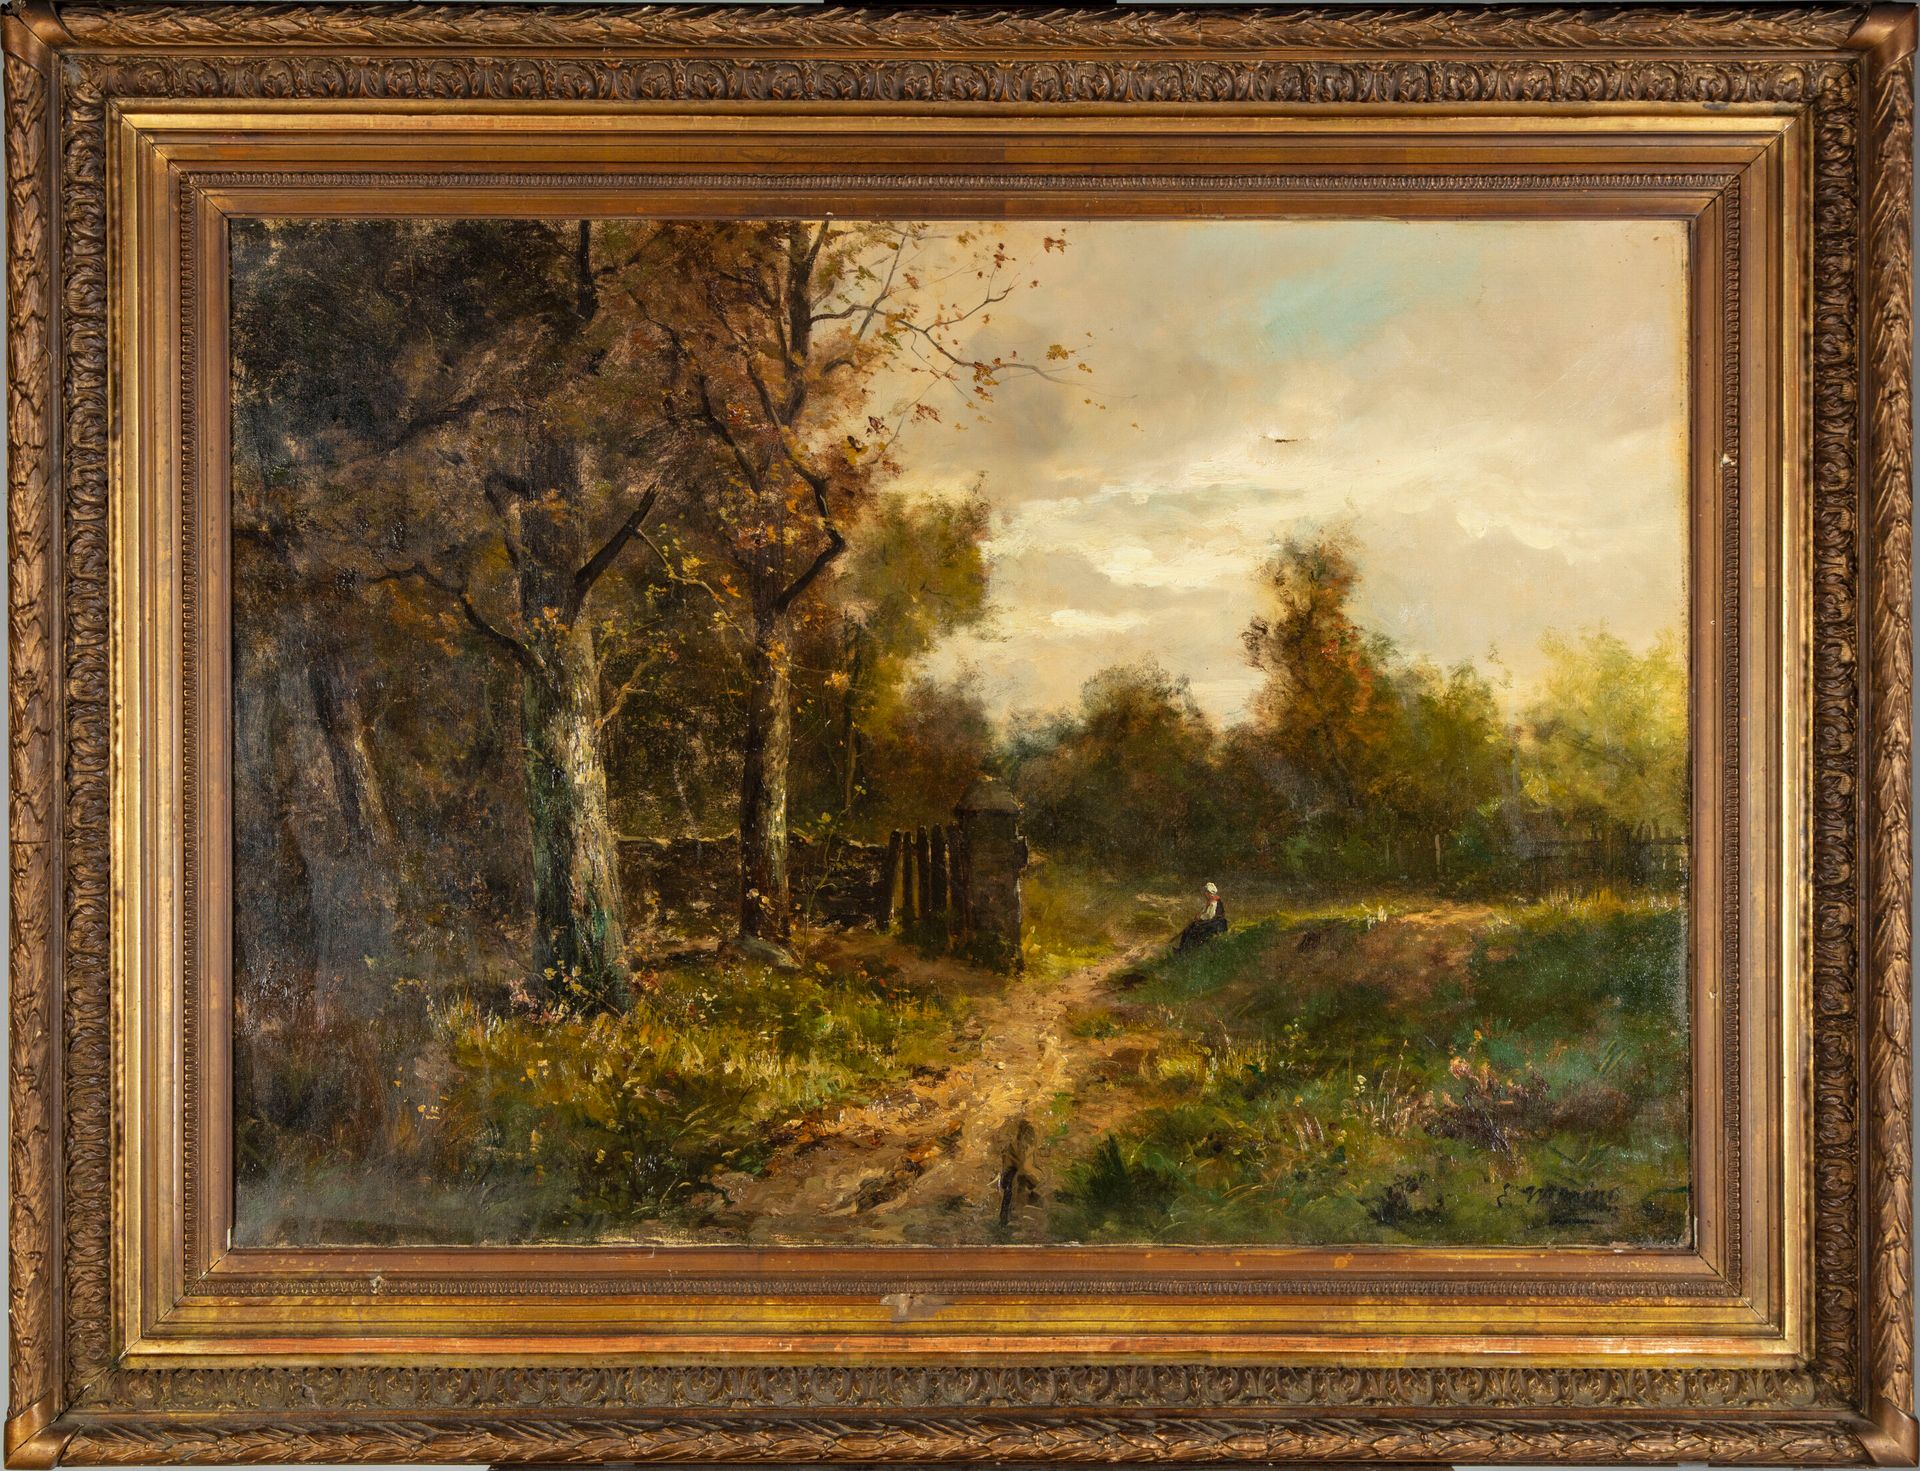 PICK-MORINO Edmund PICK-MORINO (1877-1958)

Landscape on the edge of a forest 

&hellip;